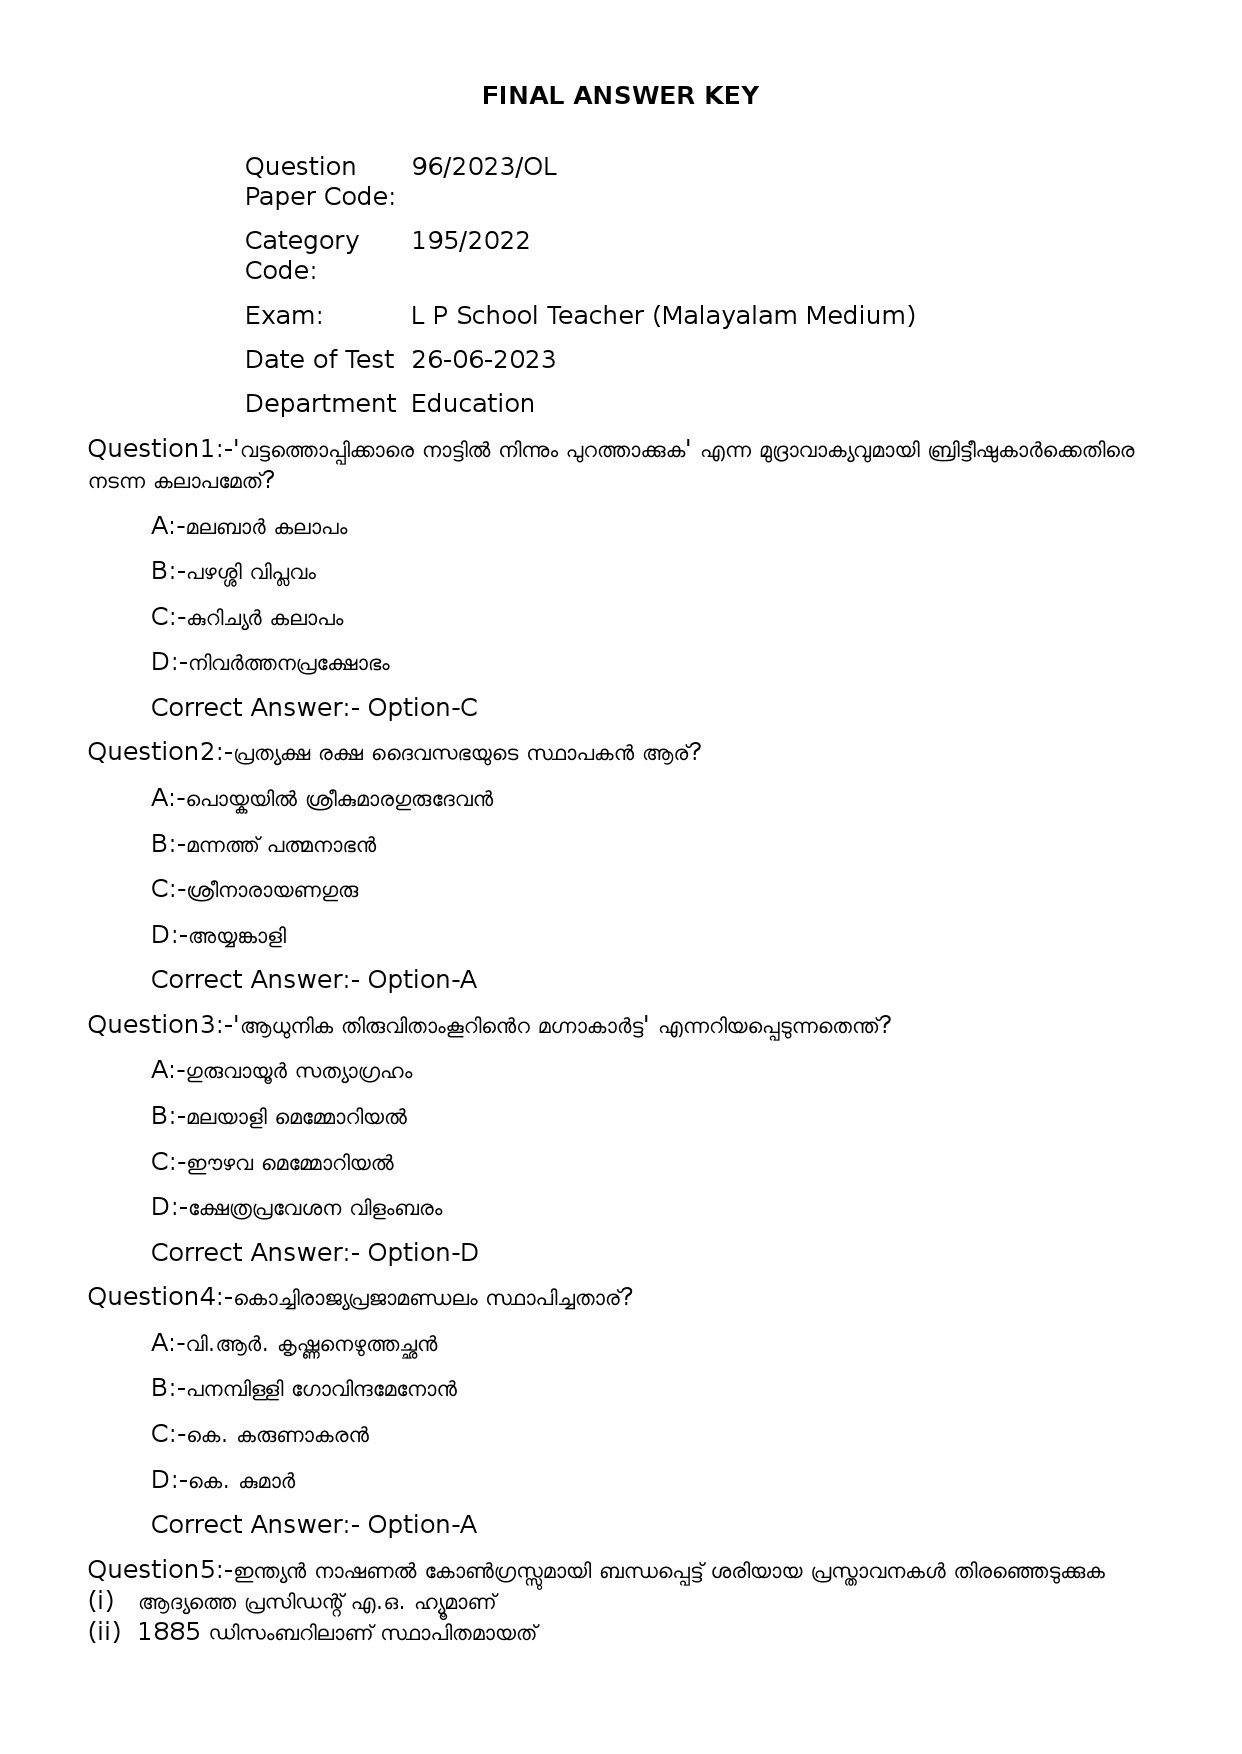 KPSC L P School Teacher Malayalam Medium Exam 2023 Code 962023OL 1